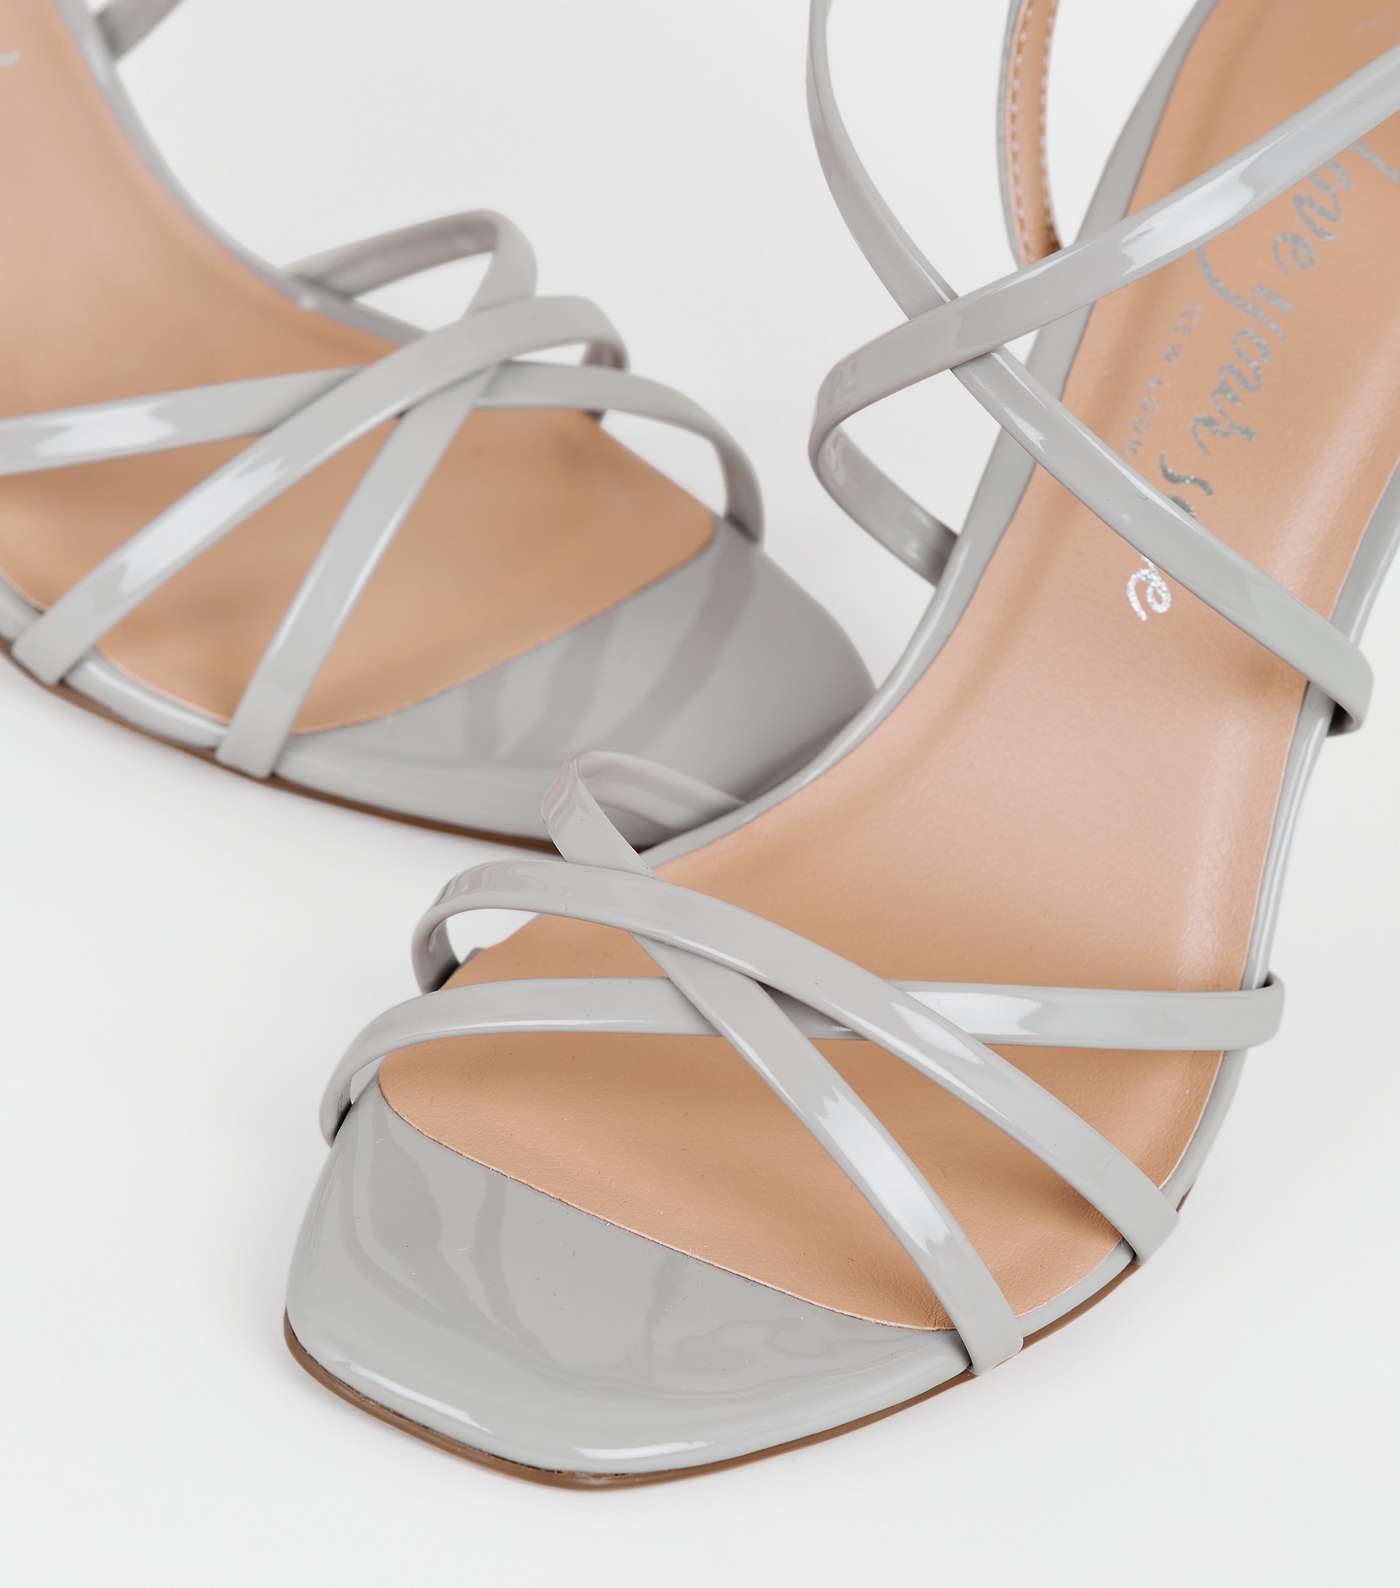 Grey Patent Strappy Stiletto Heels Image 3